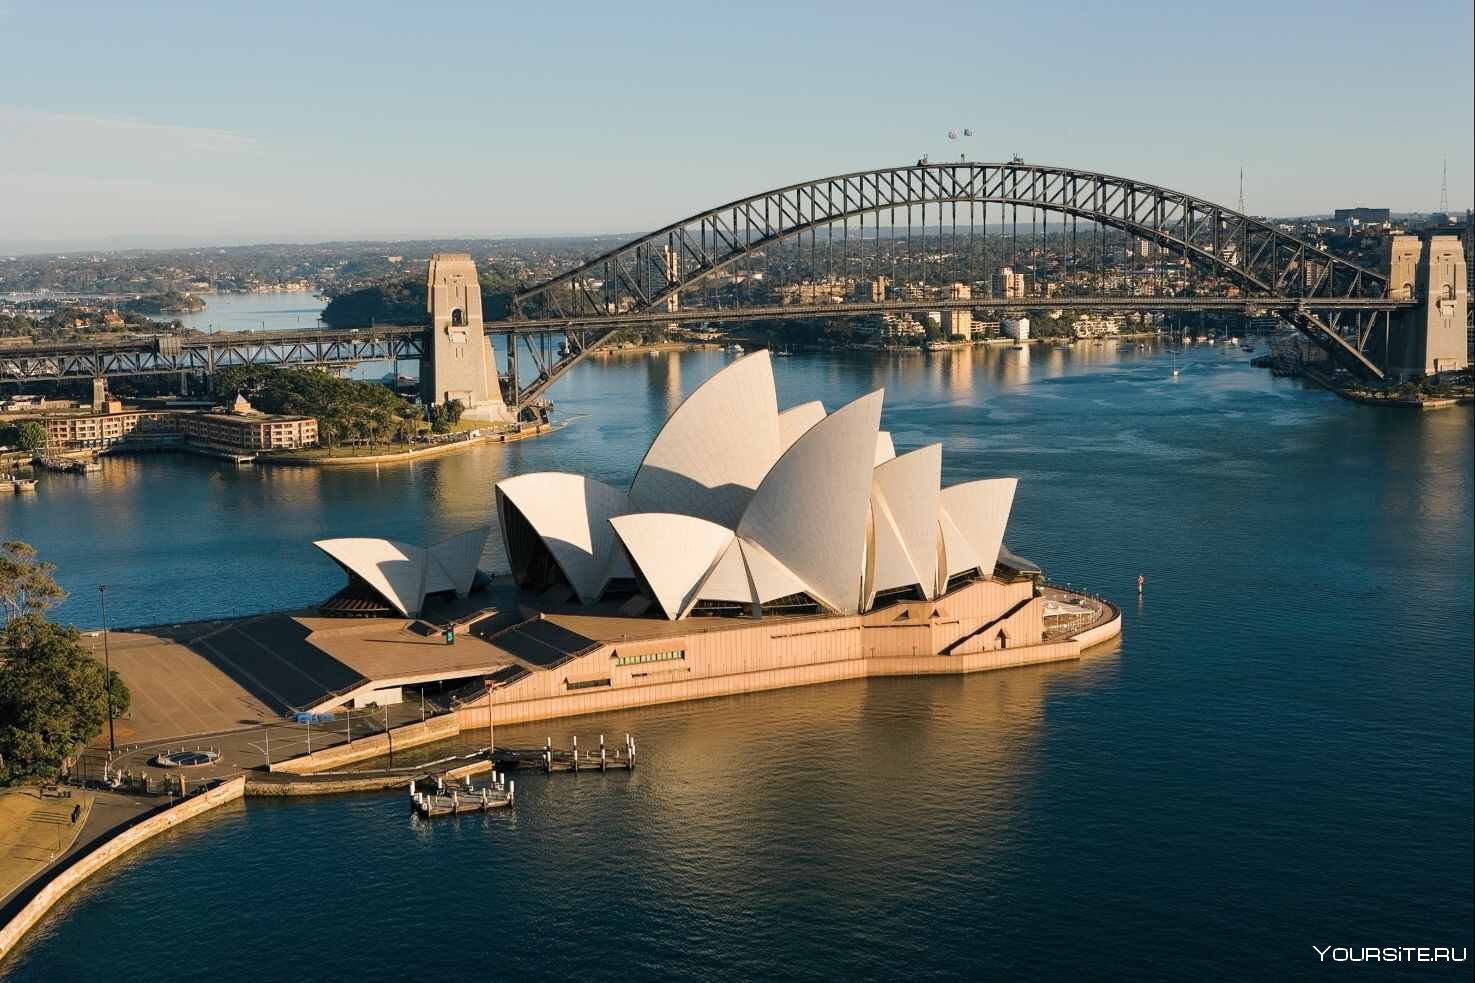 Австралия. Сиднейский оперный театр Австралия. Сиднейский оперный театр и Харбор-бридж. Мост Харбор-бридж в Сиднее. Мост Харбор бридж в Австралии.